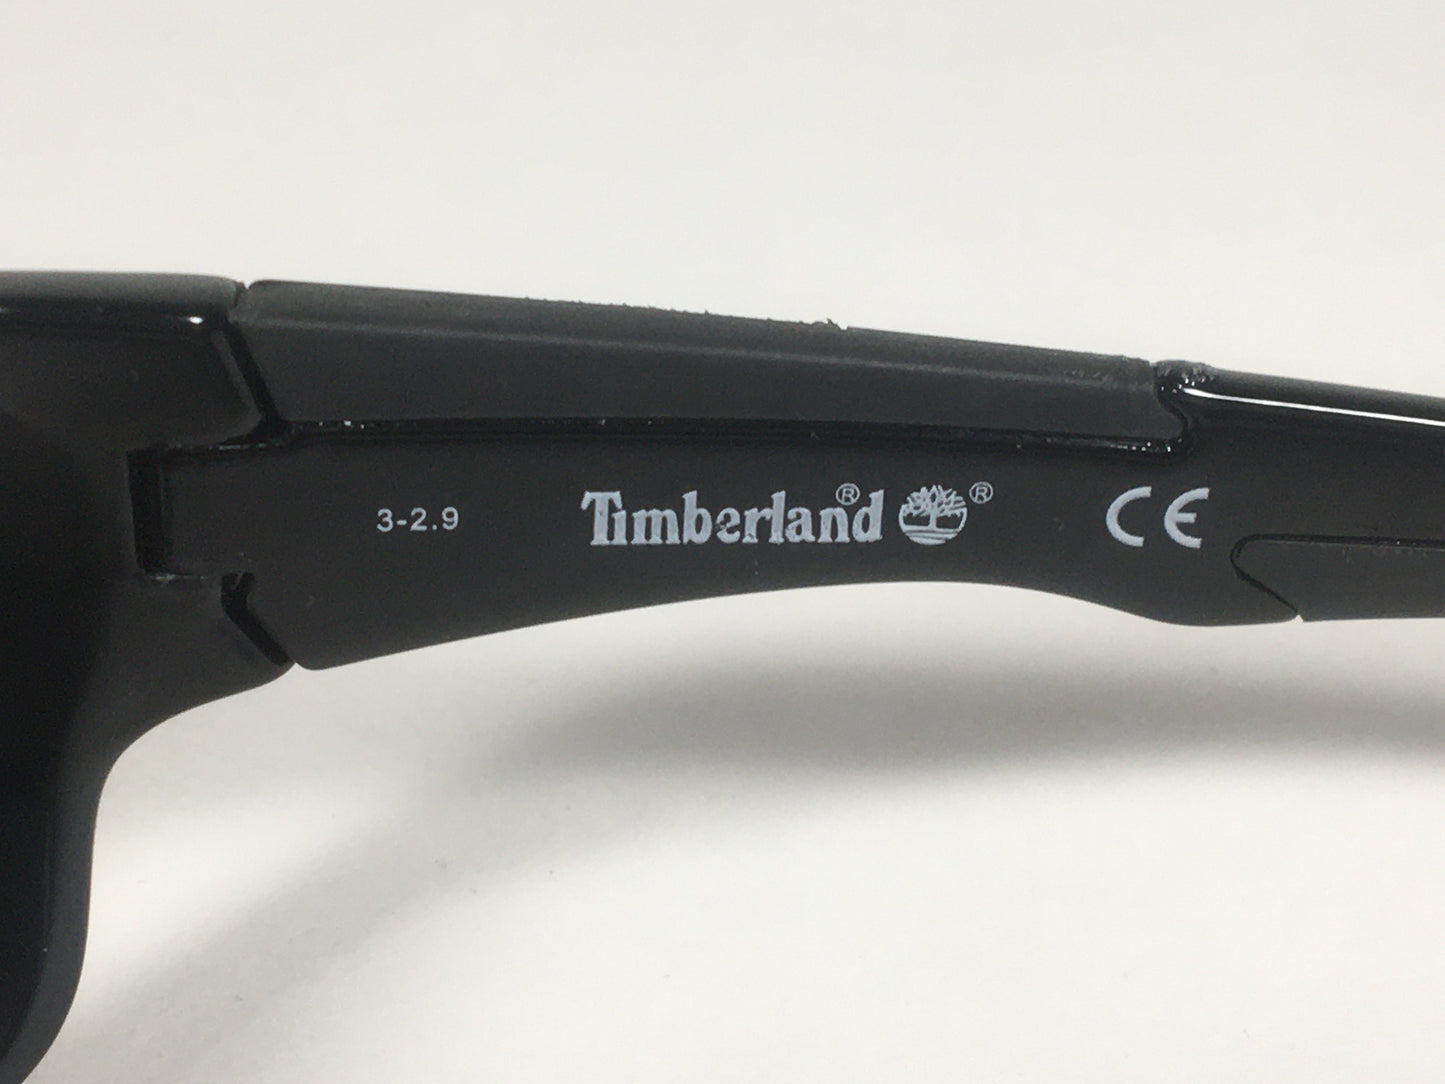 Timberland Sport Wrap Sunglasses Shiny Black Frame Gray Lens TB7150 01C - Sunglasses